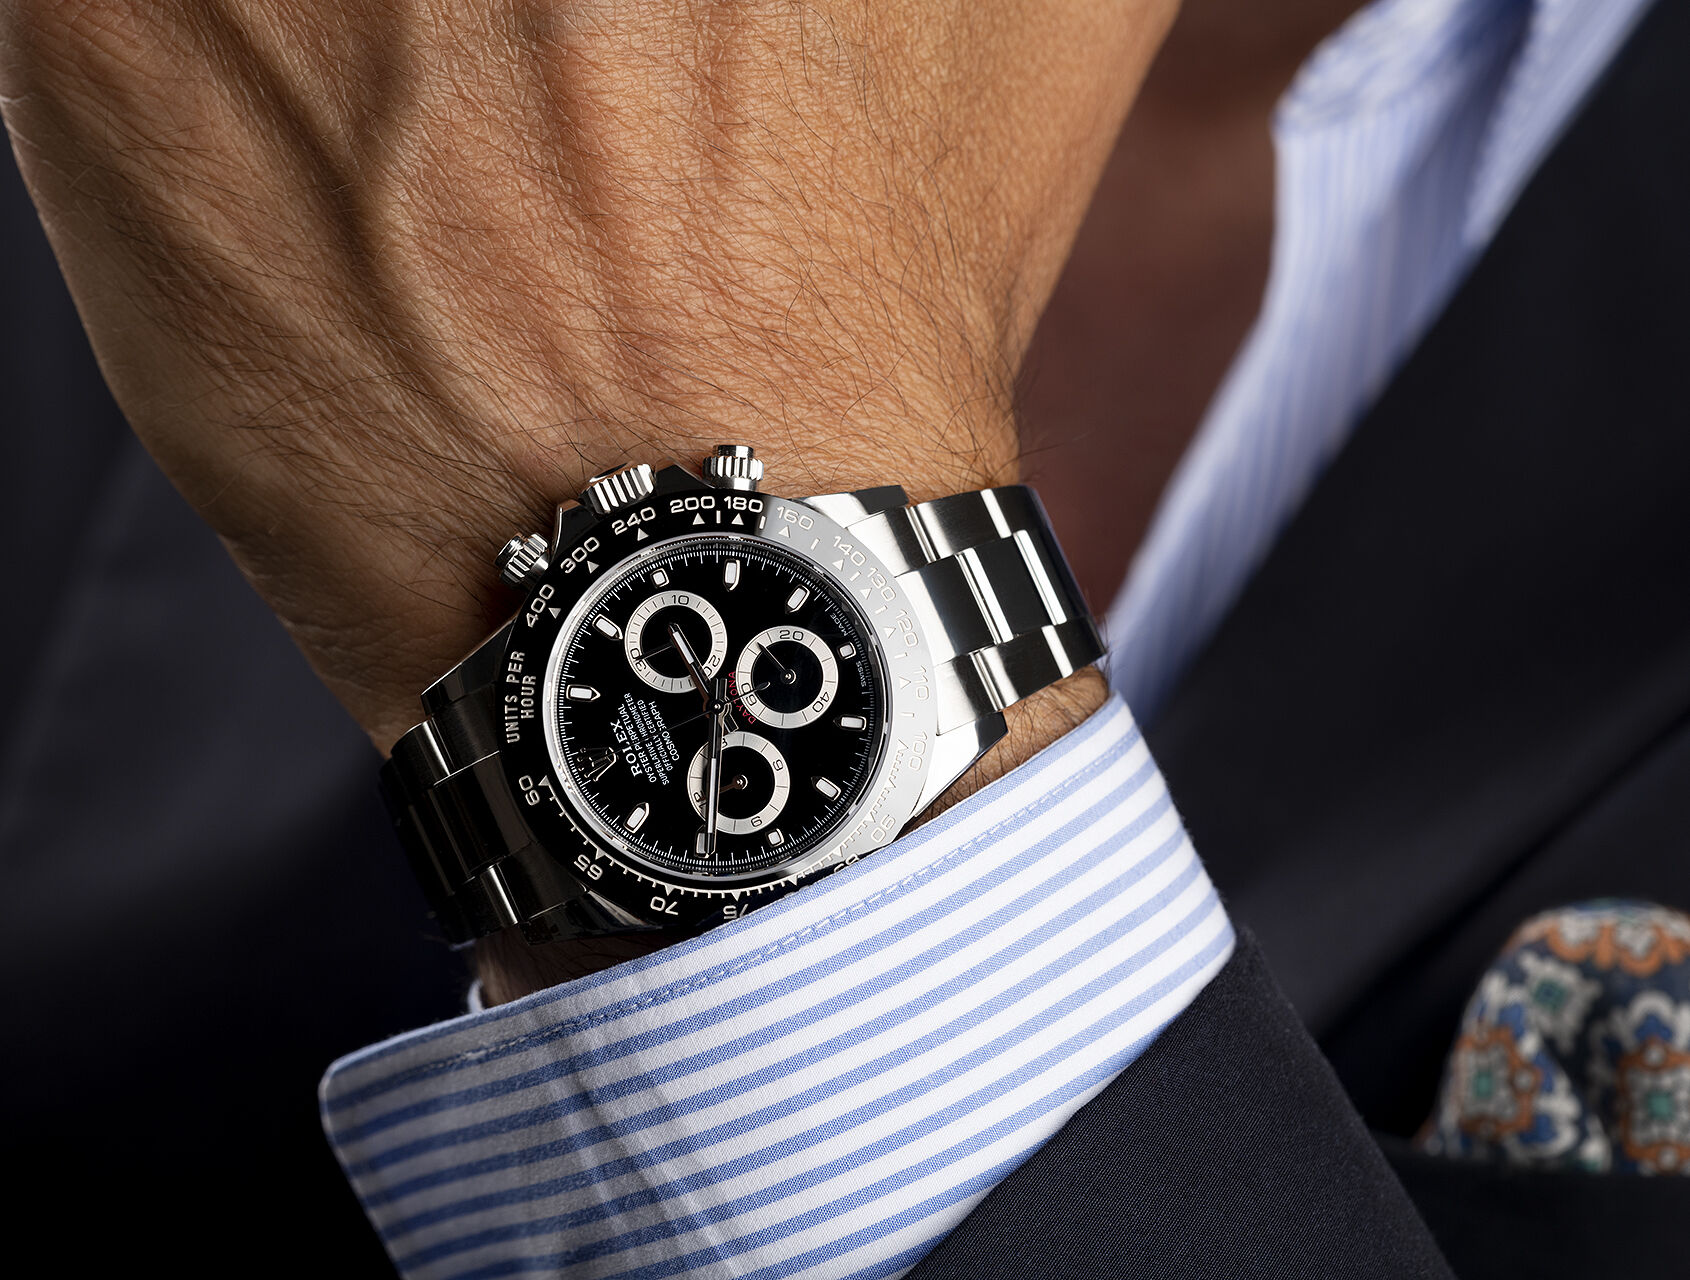 Rolex Cosmograph Daytona Watches | ref 116500LN 